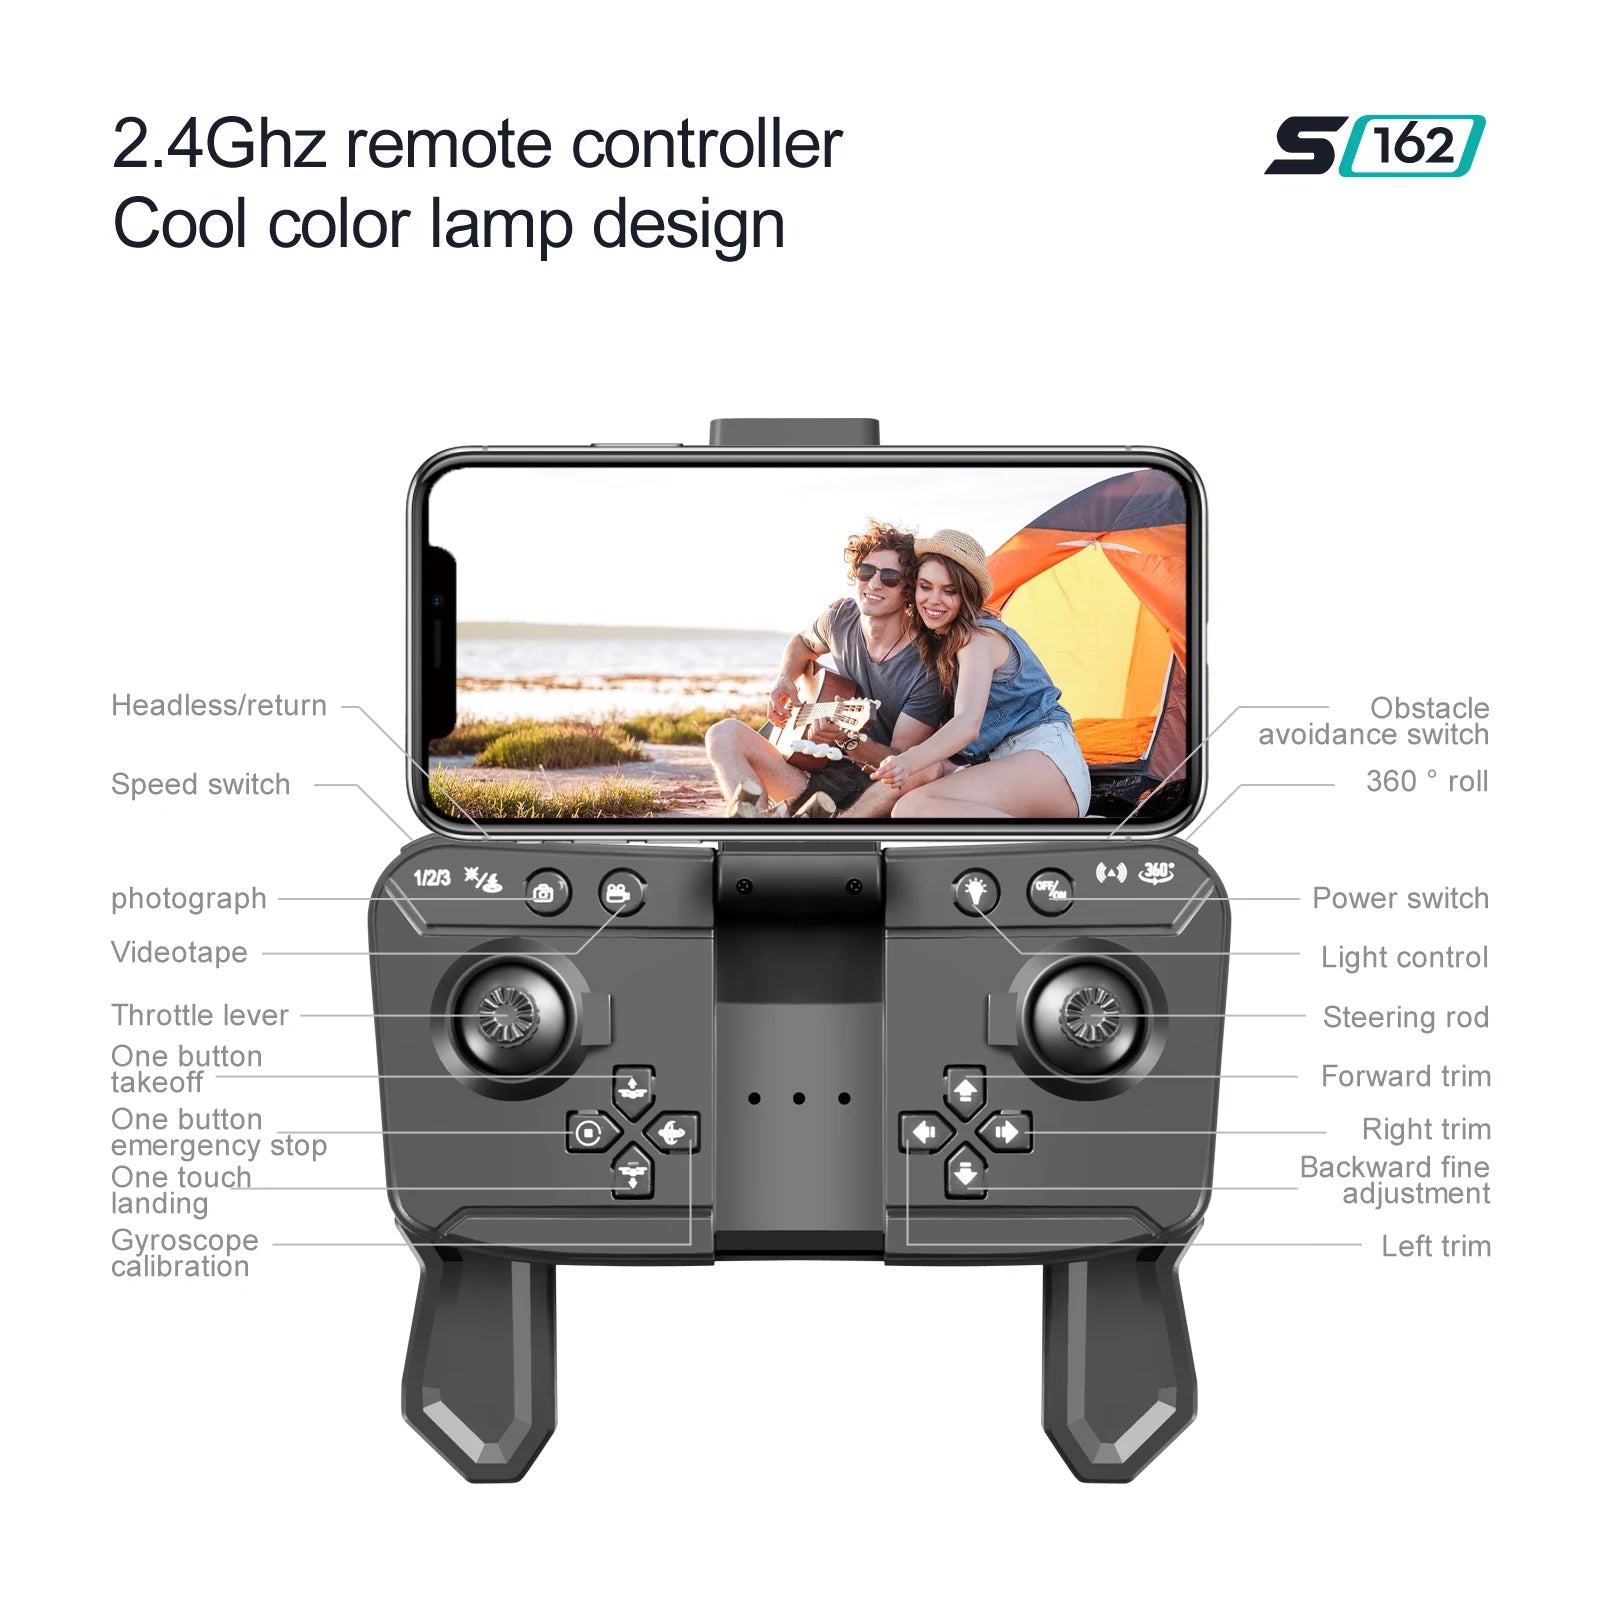 S162 Pro Drone, 2.4ghz remote controller 5 162 cool color lamp design